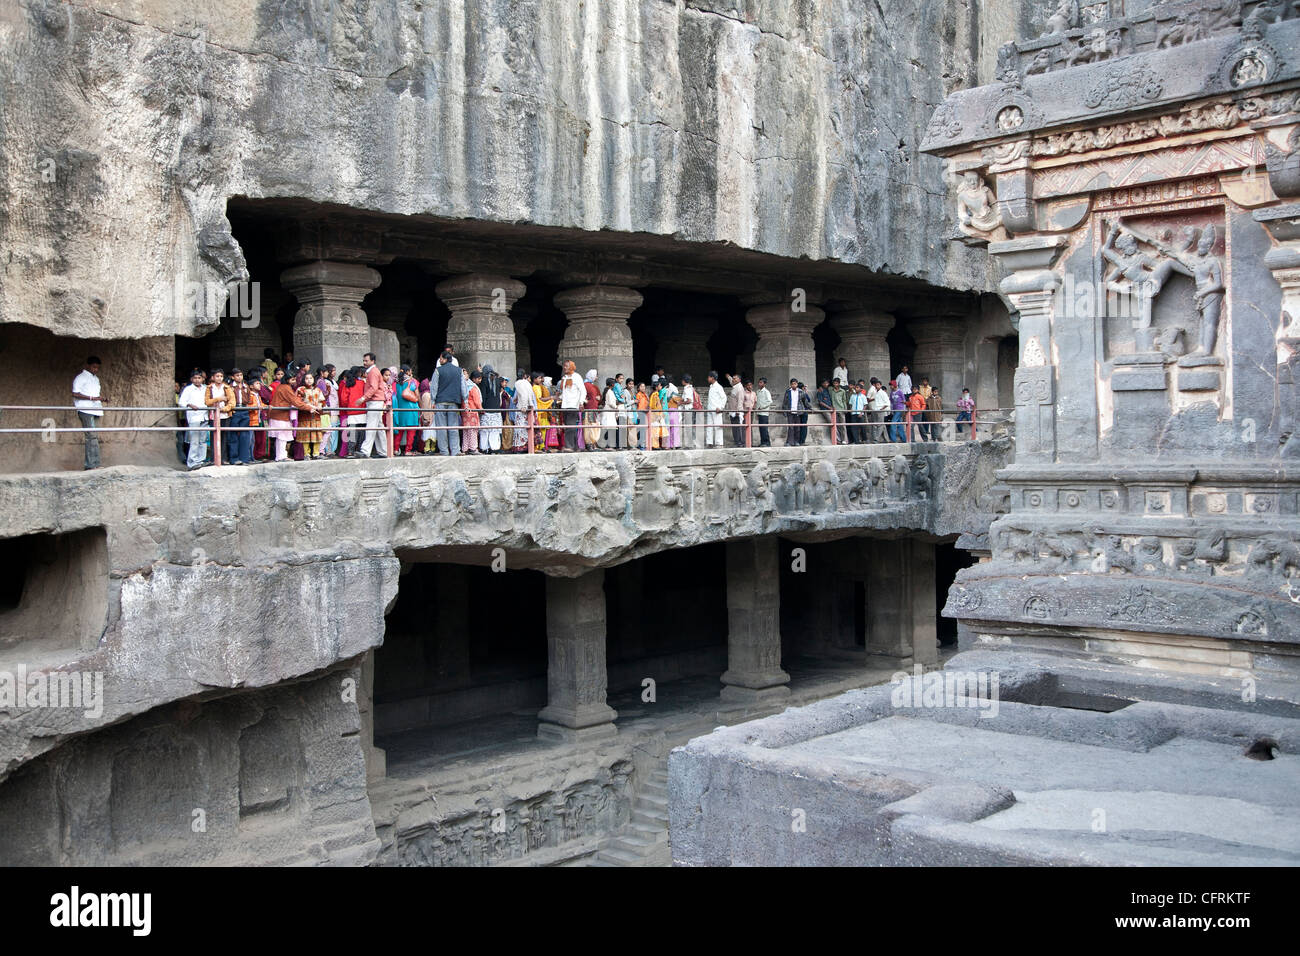 Les chercheurs indiens visiter Temple Kailasa. Les grottes d'Ellora. L'État du Maharashtra. L'Inde Banque D'Images